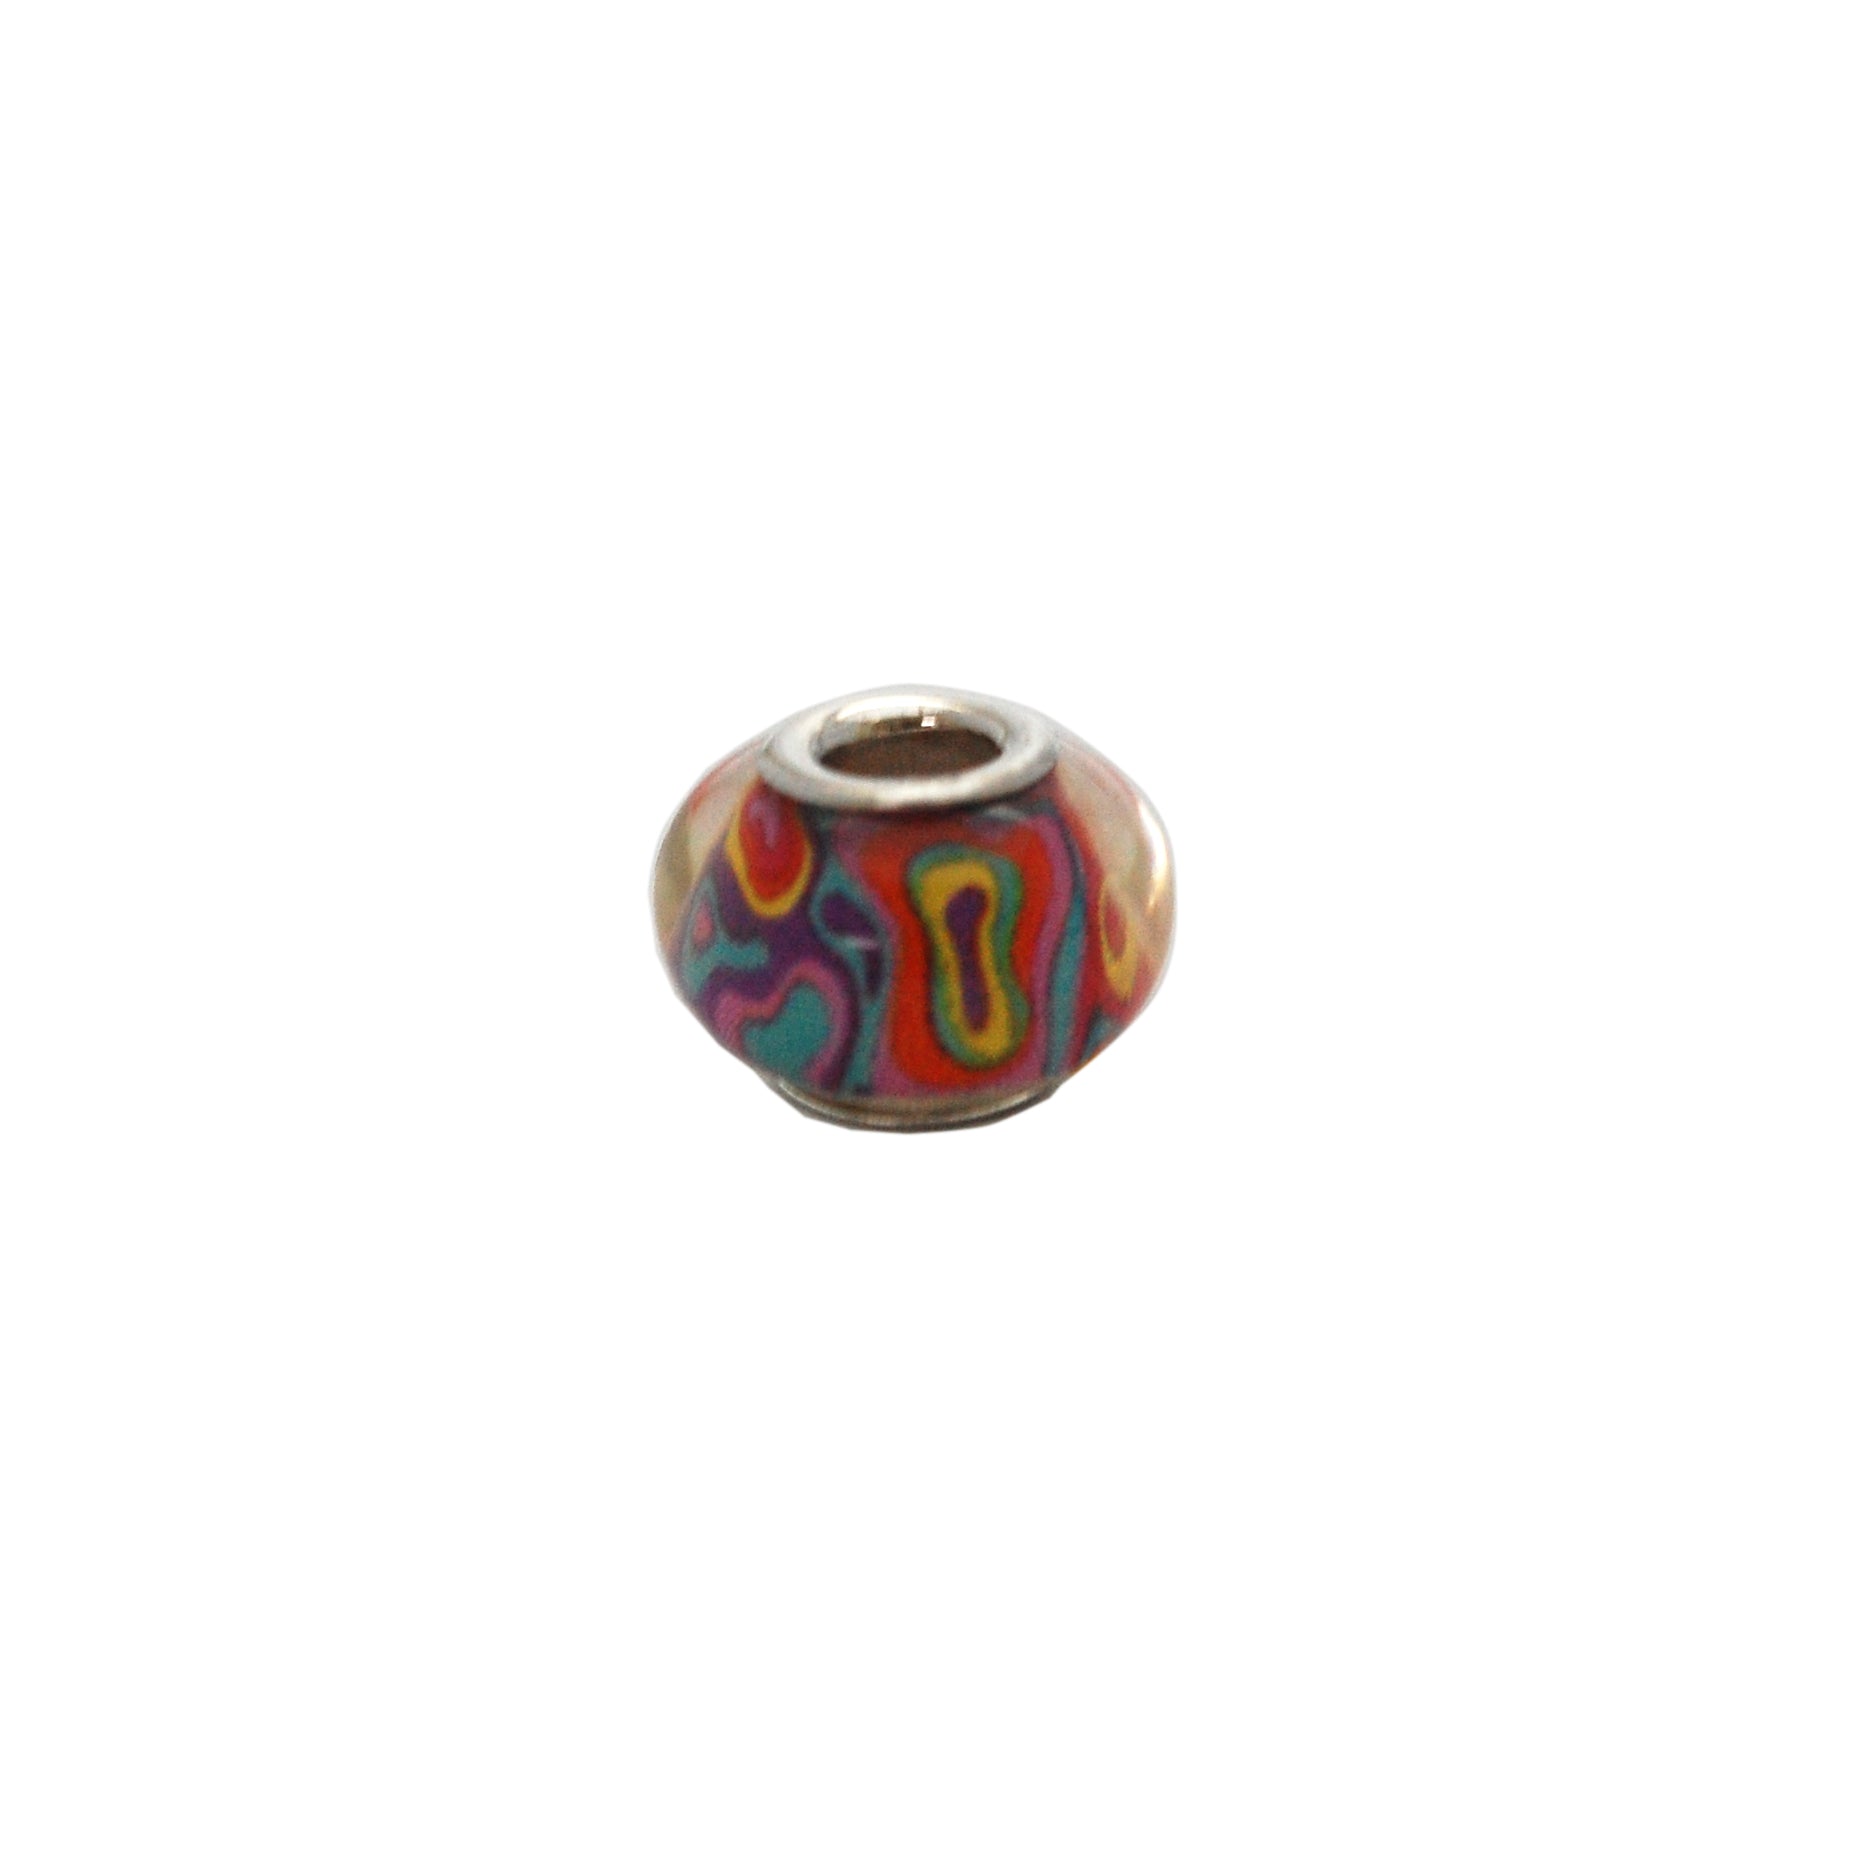 ESCM 4790: Pendant-Bracelet Murano Artistic Psychadelic Flair (Technicolor)